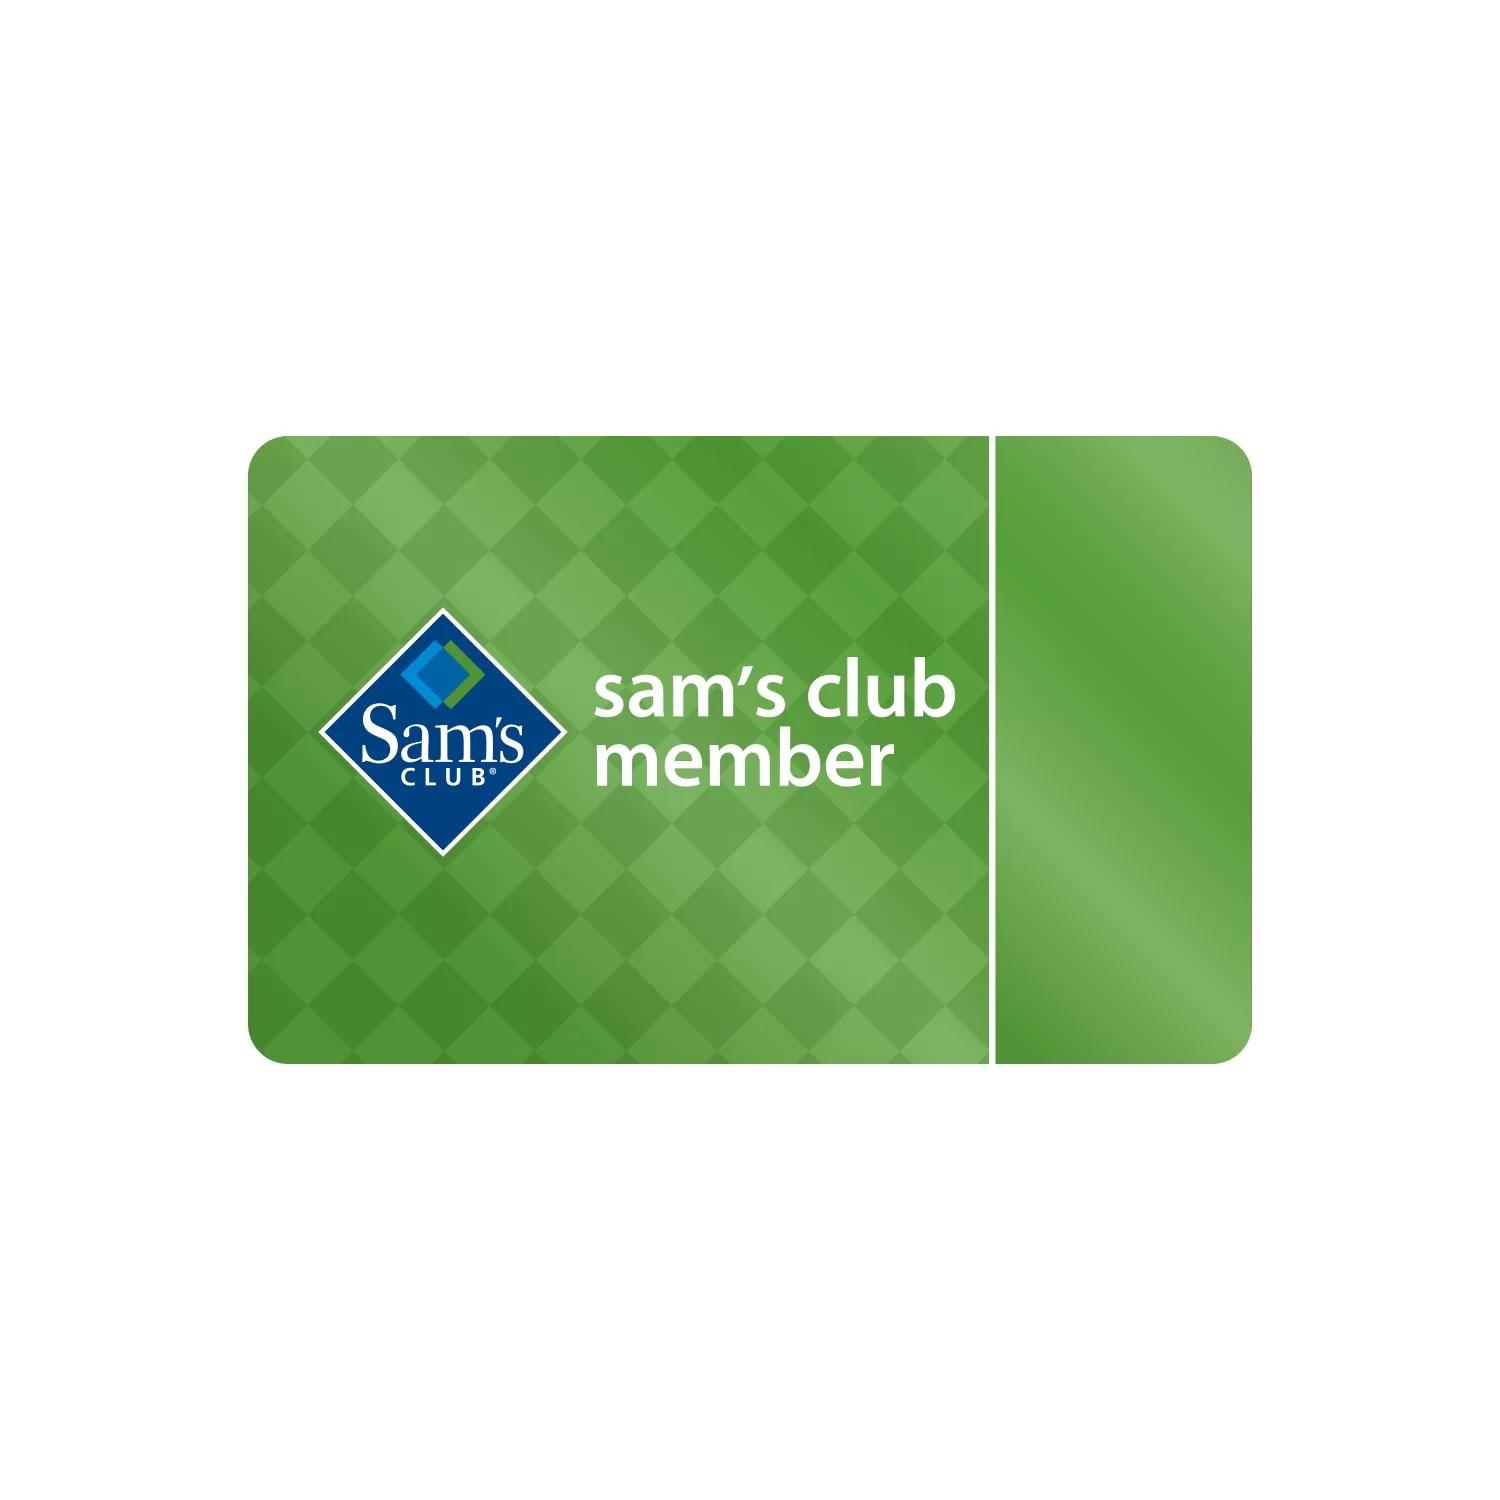 Sam's Club member card 